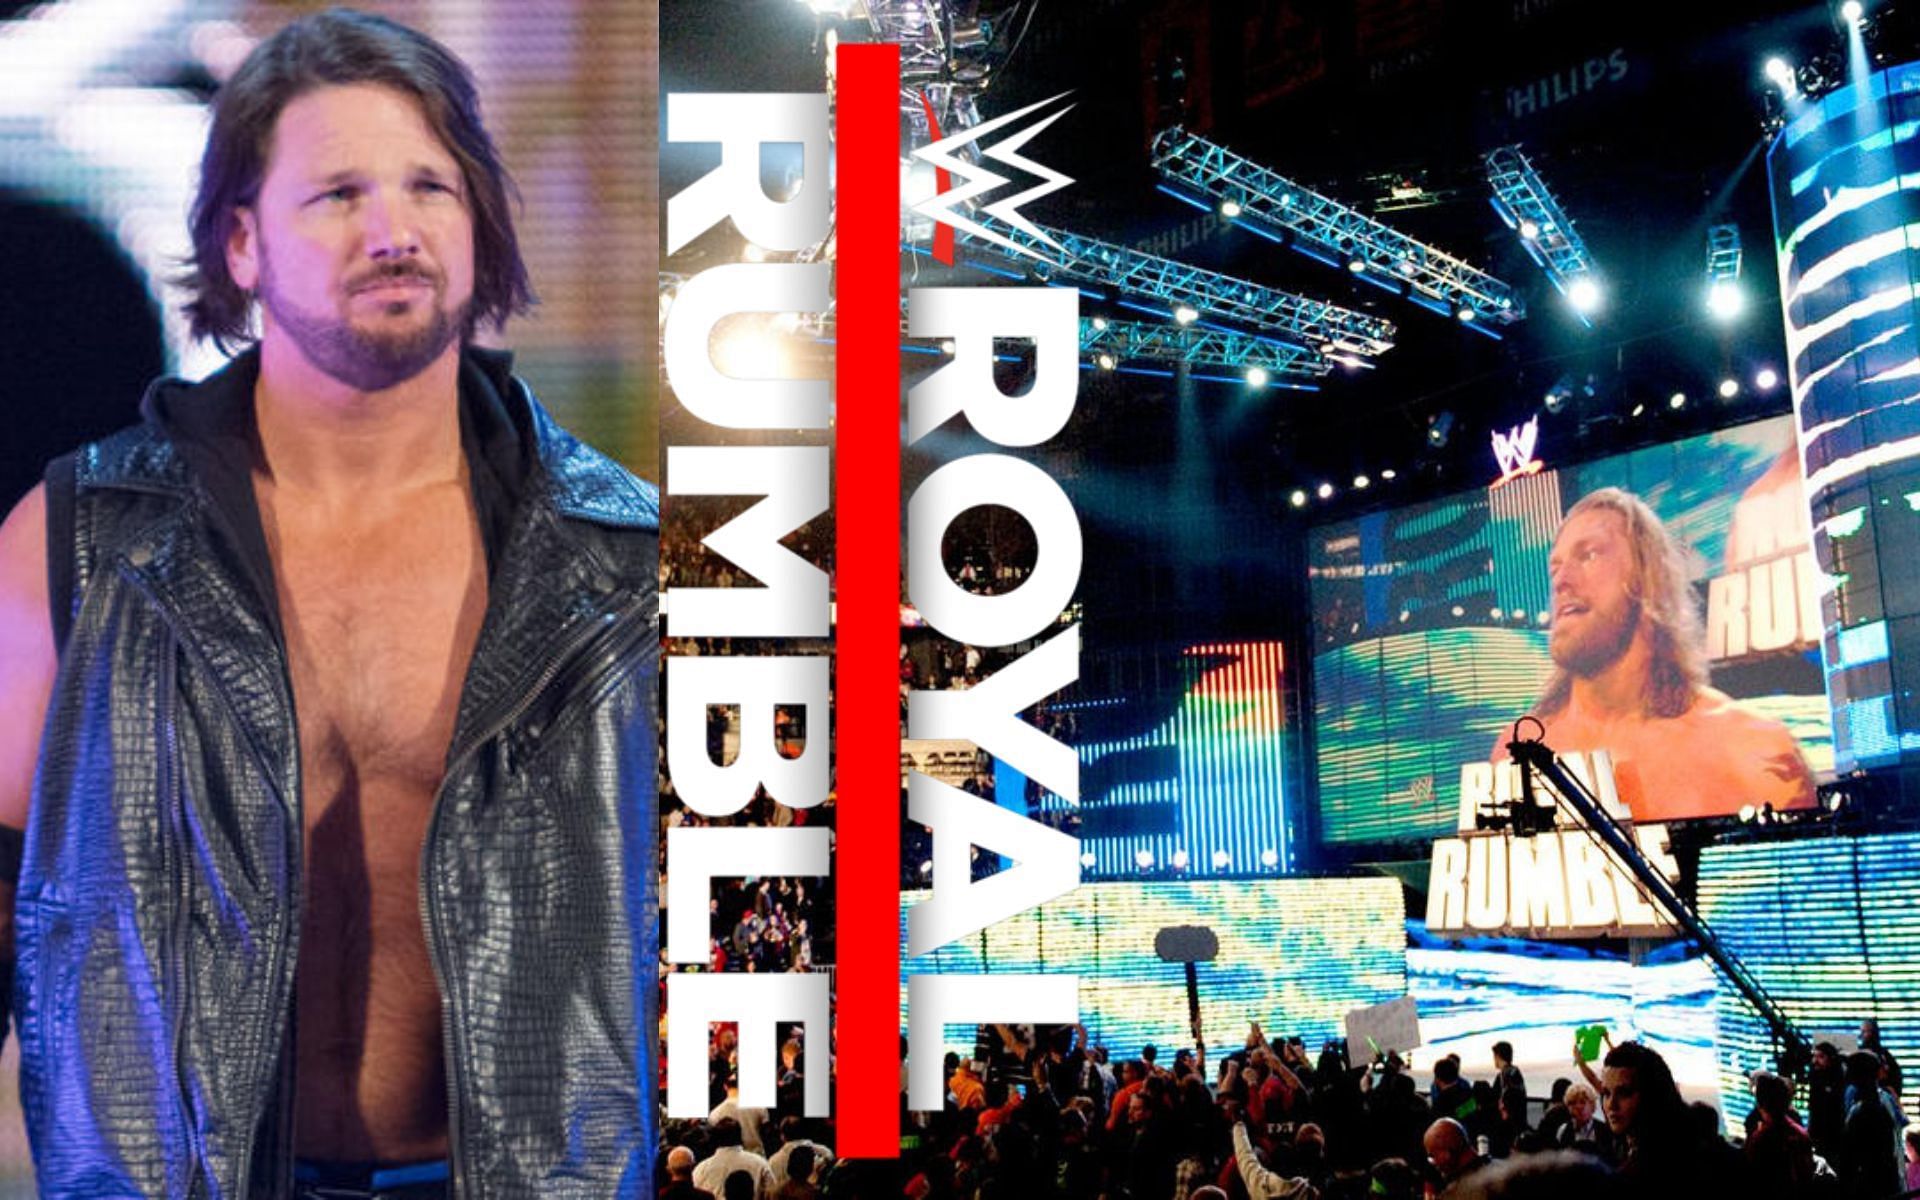 AJ Styles makes his Phenomenal return in 2016, as Edge returns in 2010!